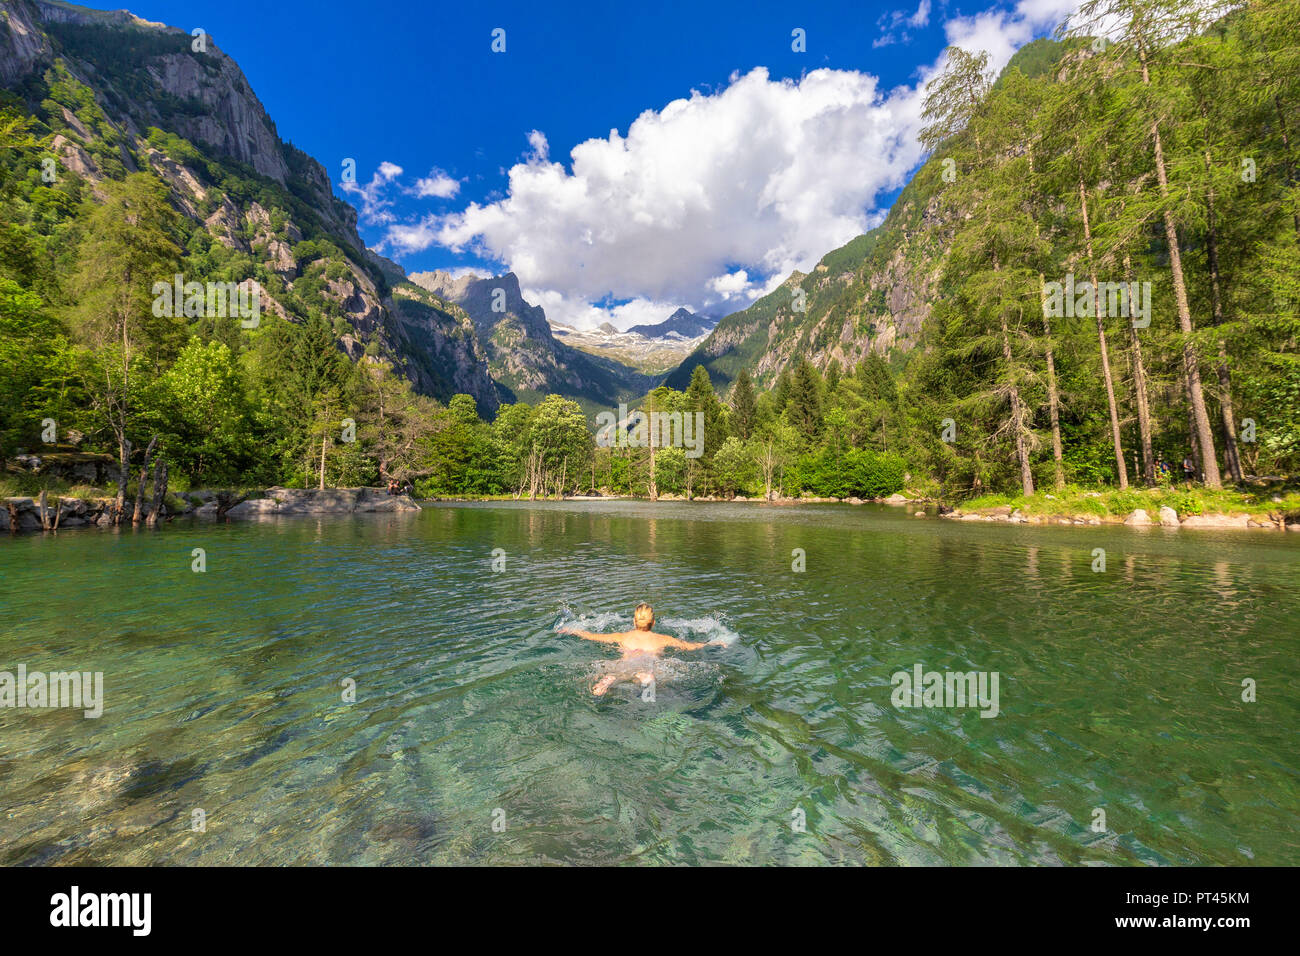 A girl swims in a clear alpine lake, Val di Mello (Mello Valley), Valmasino, Valtellina, Lombardy, Italy, Europe, Stock Photo